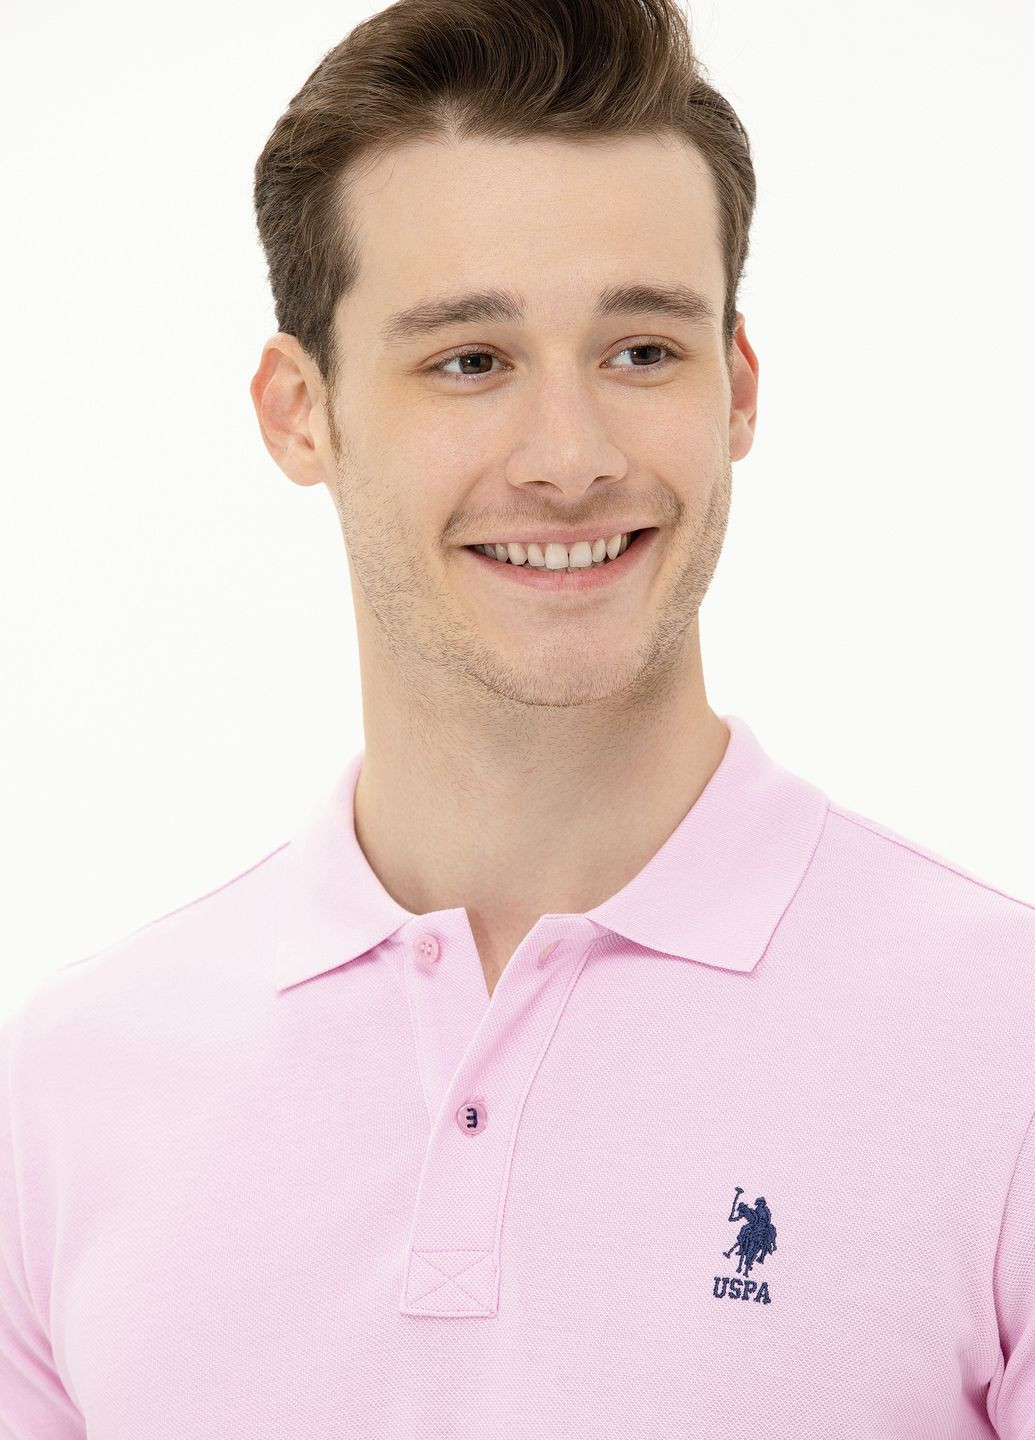 Светло-розовая футболка поло мужское U.S. Polo Assn.